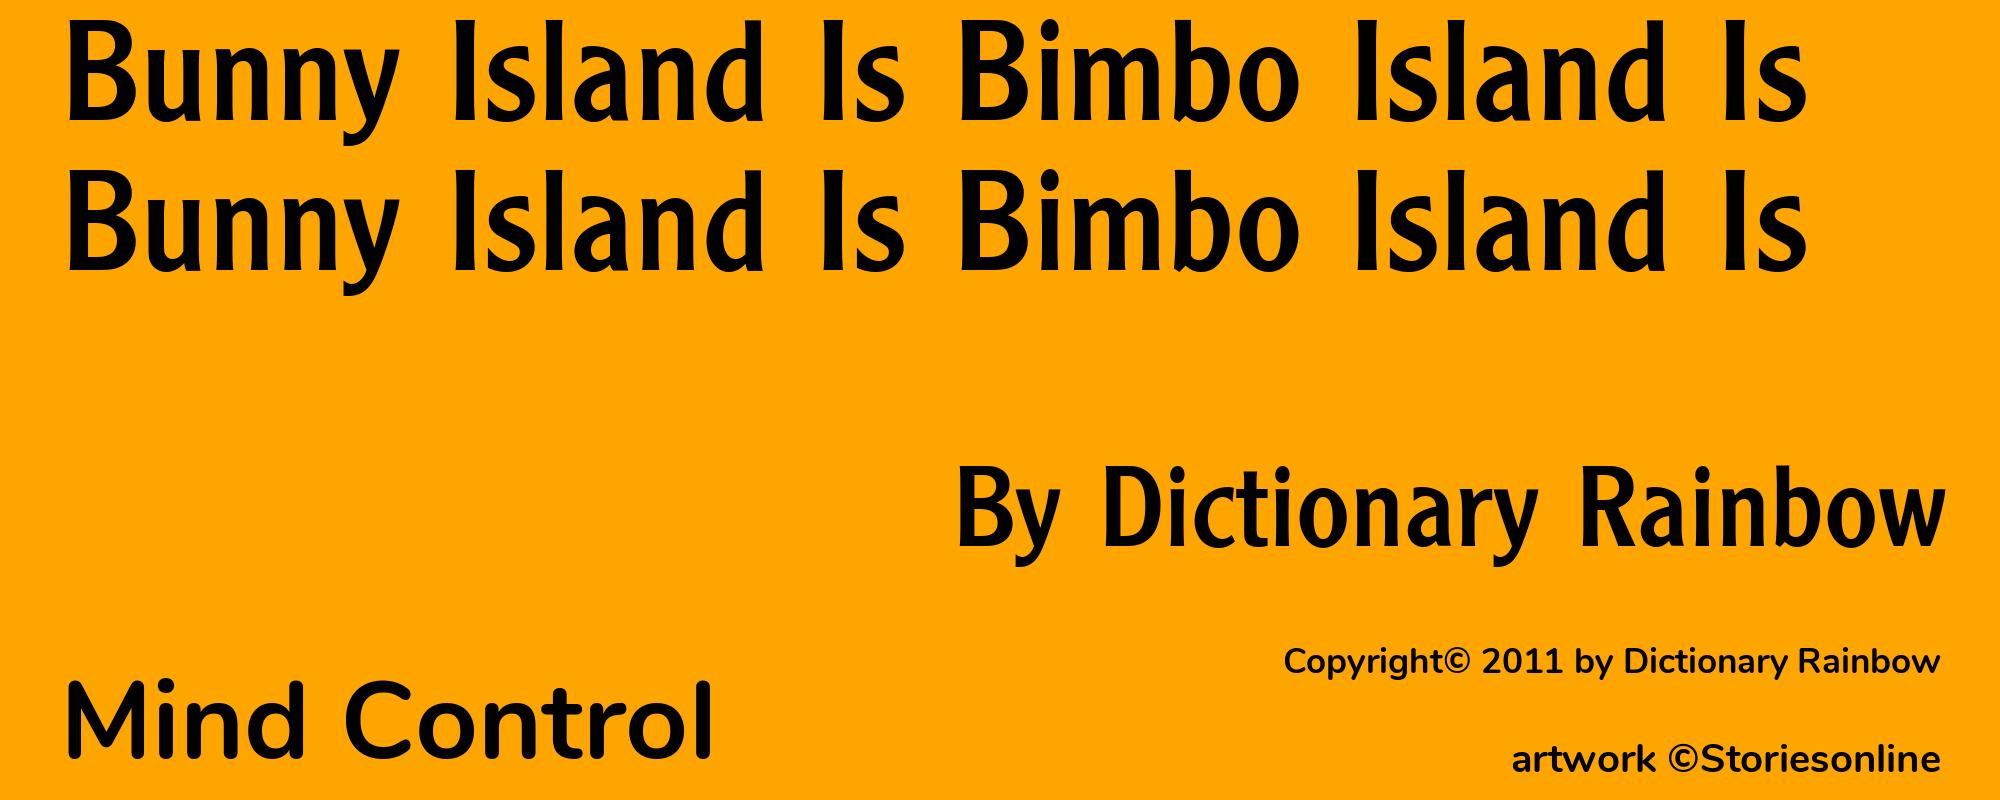 Bunny Island Is Bimbo Island Is Bunny Island Is Bimbo Island Is - Cover